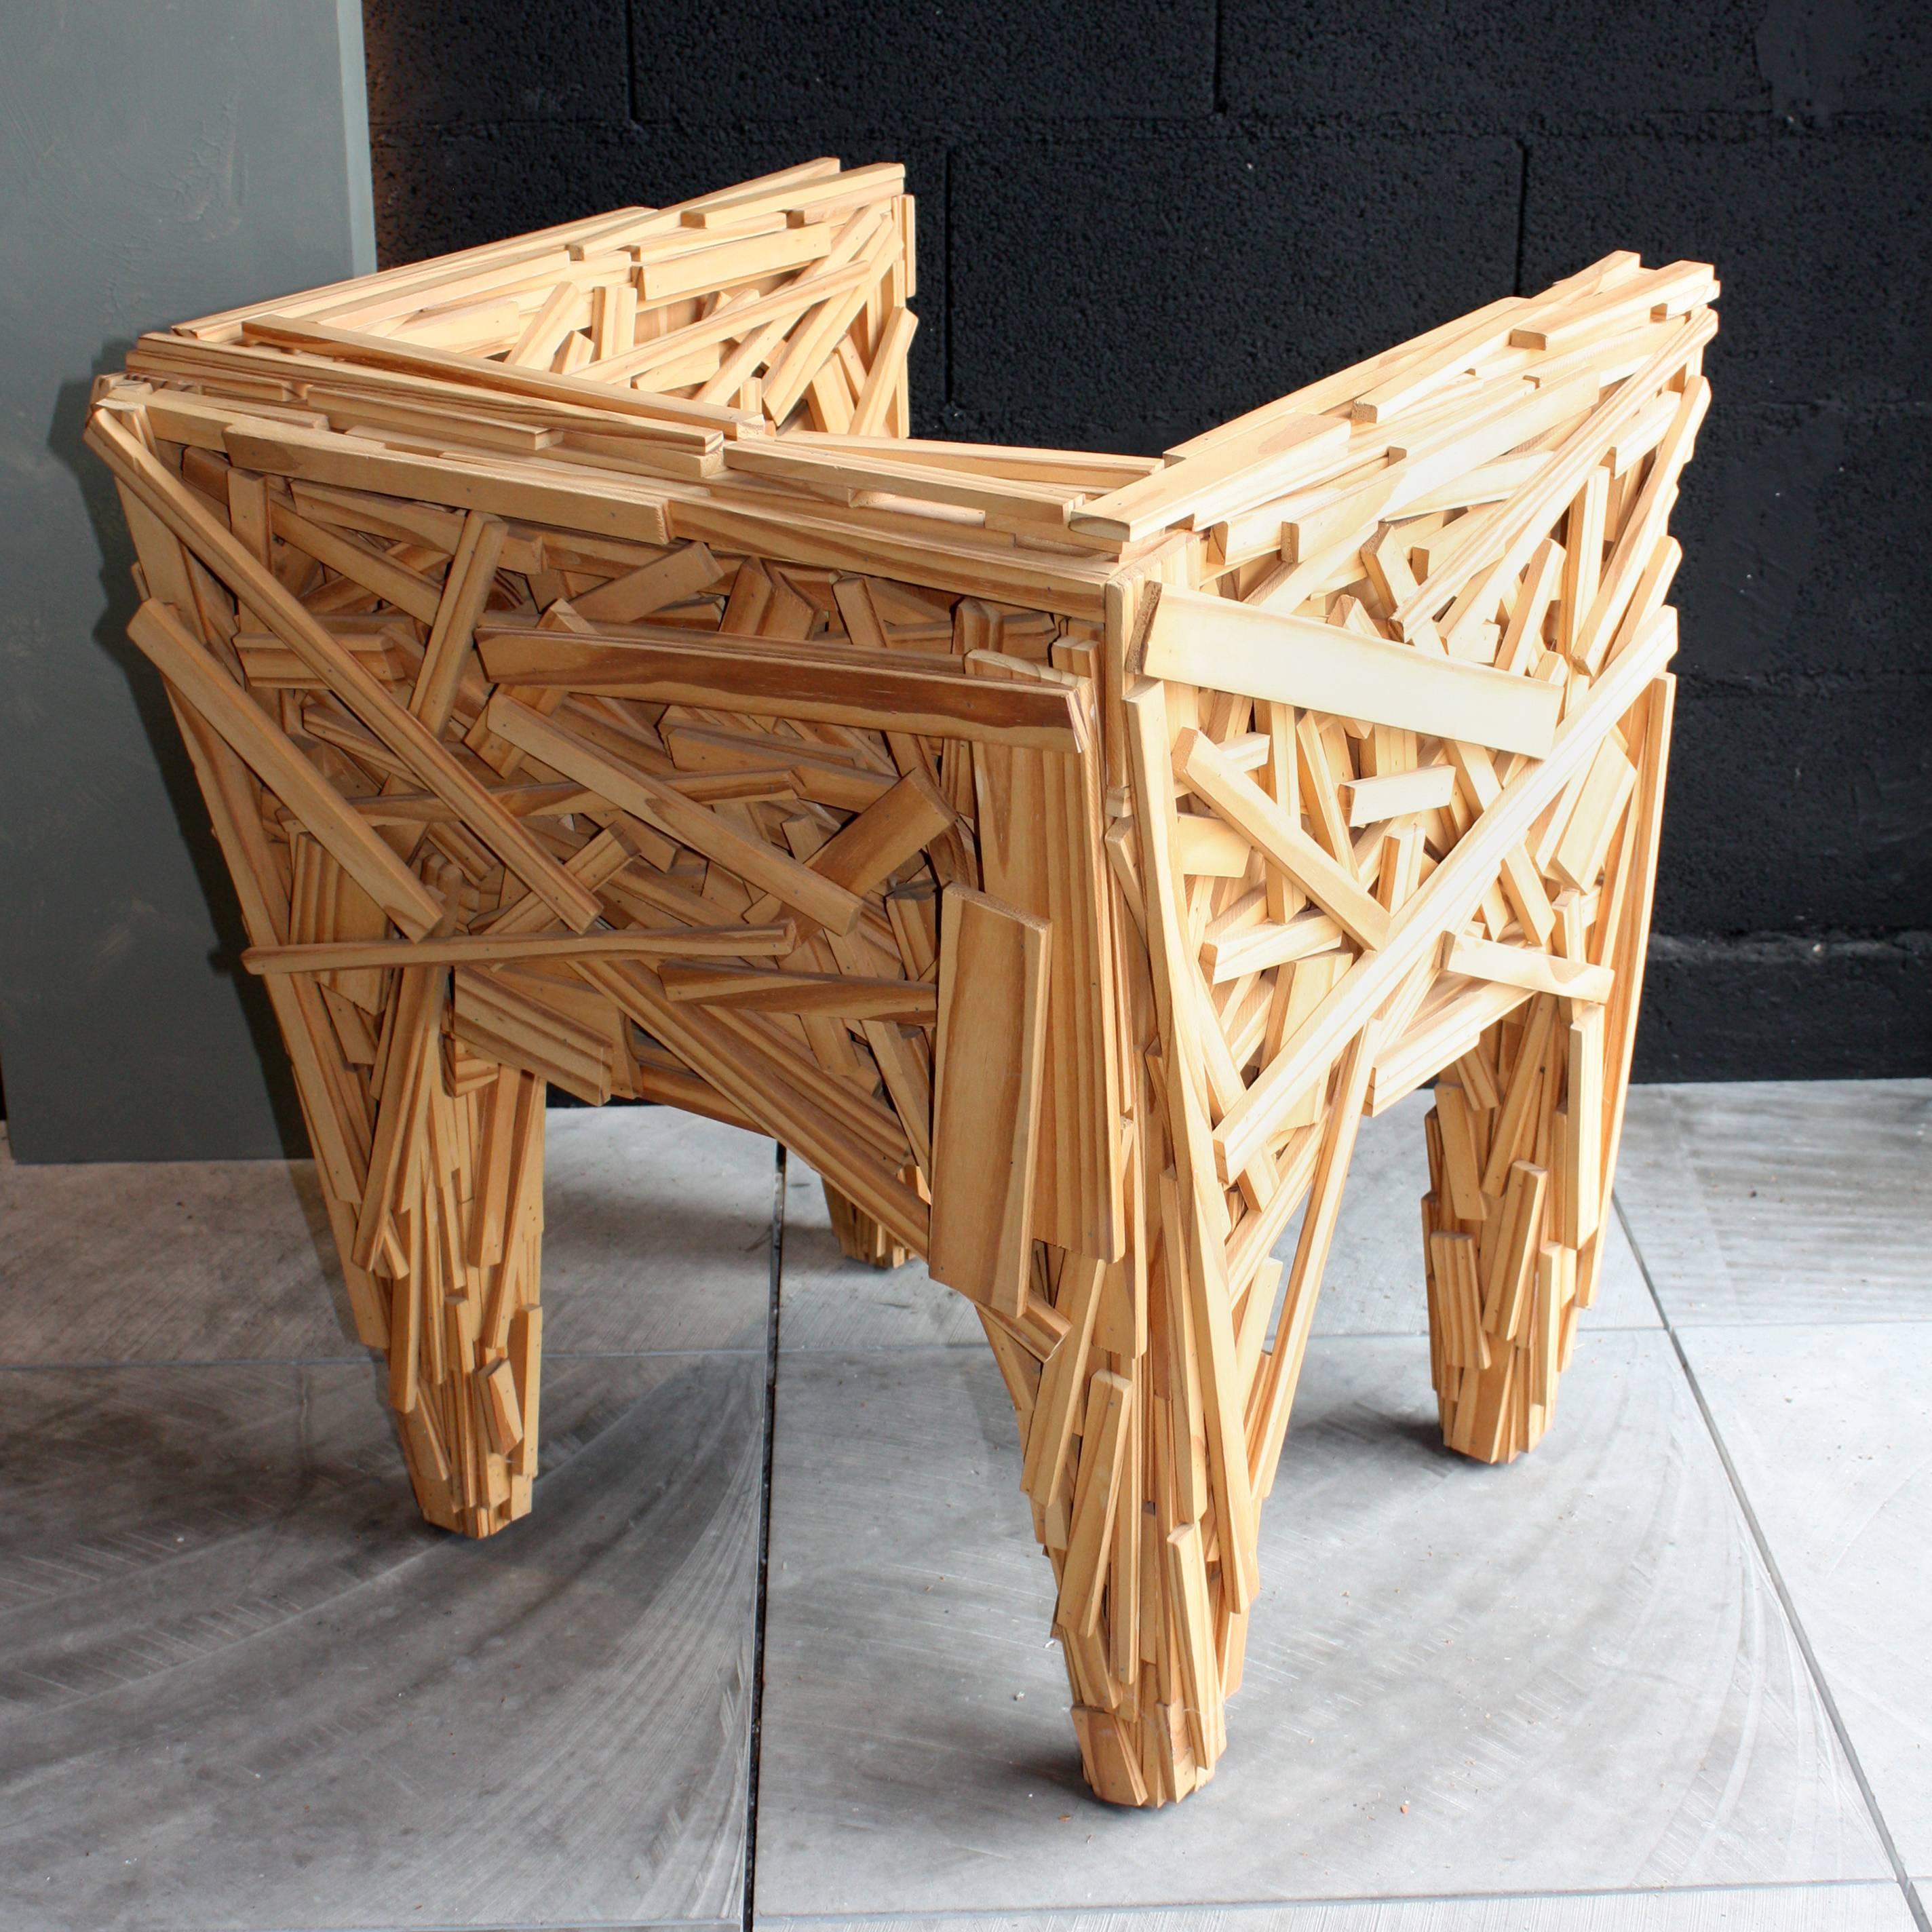 Post-Modern Favela Chair by Fernando and Humberto Campana for Edra, Italy, 2003